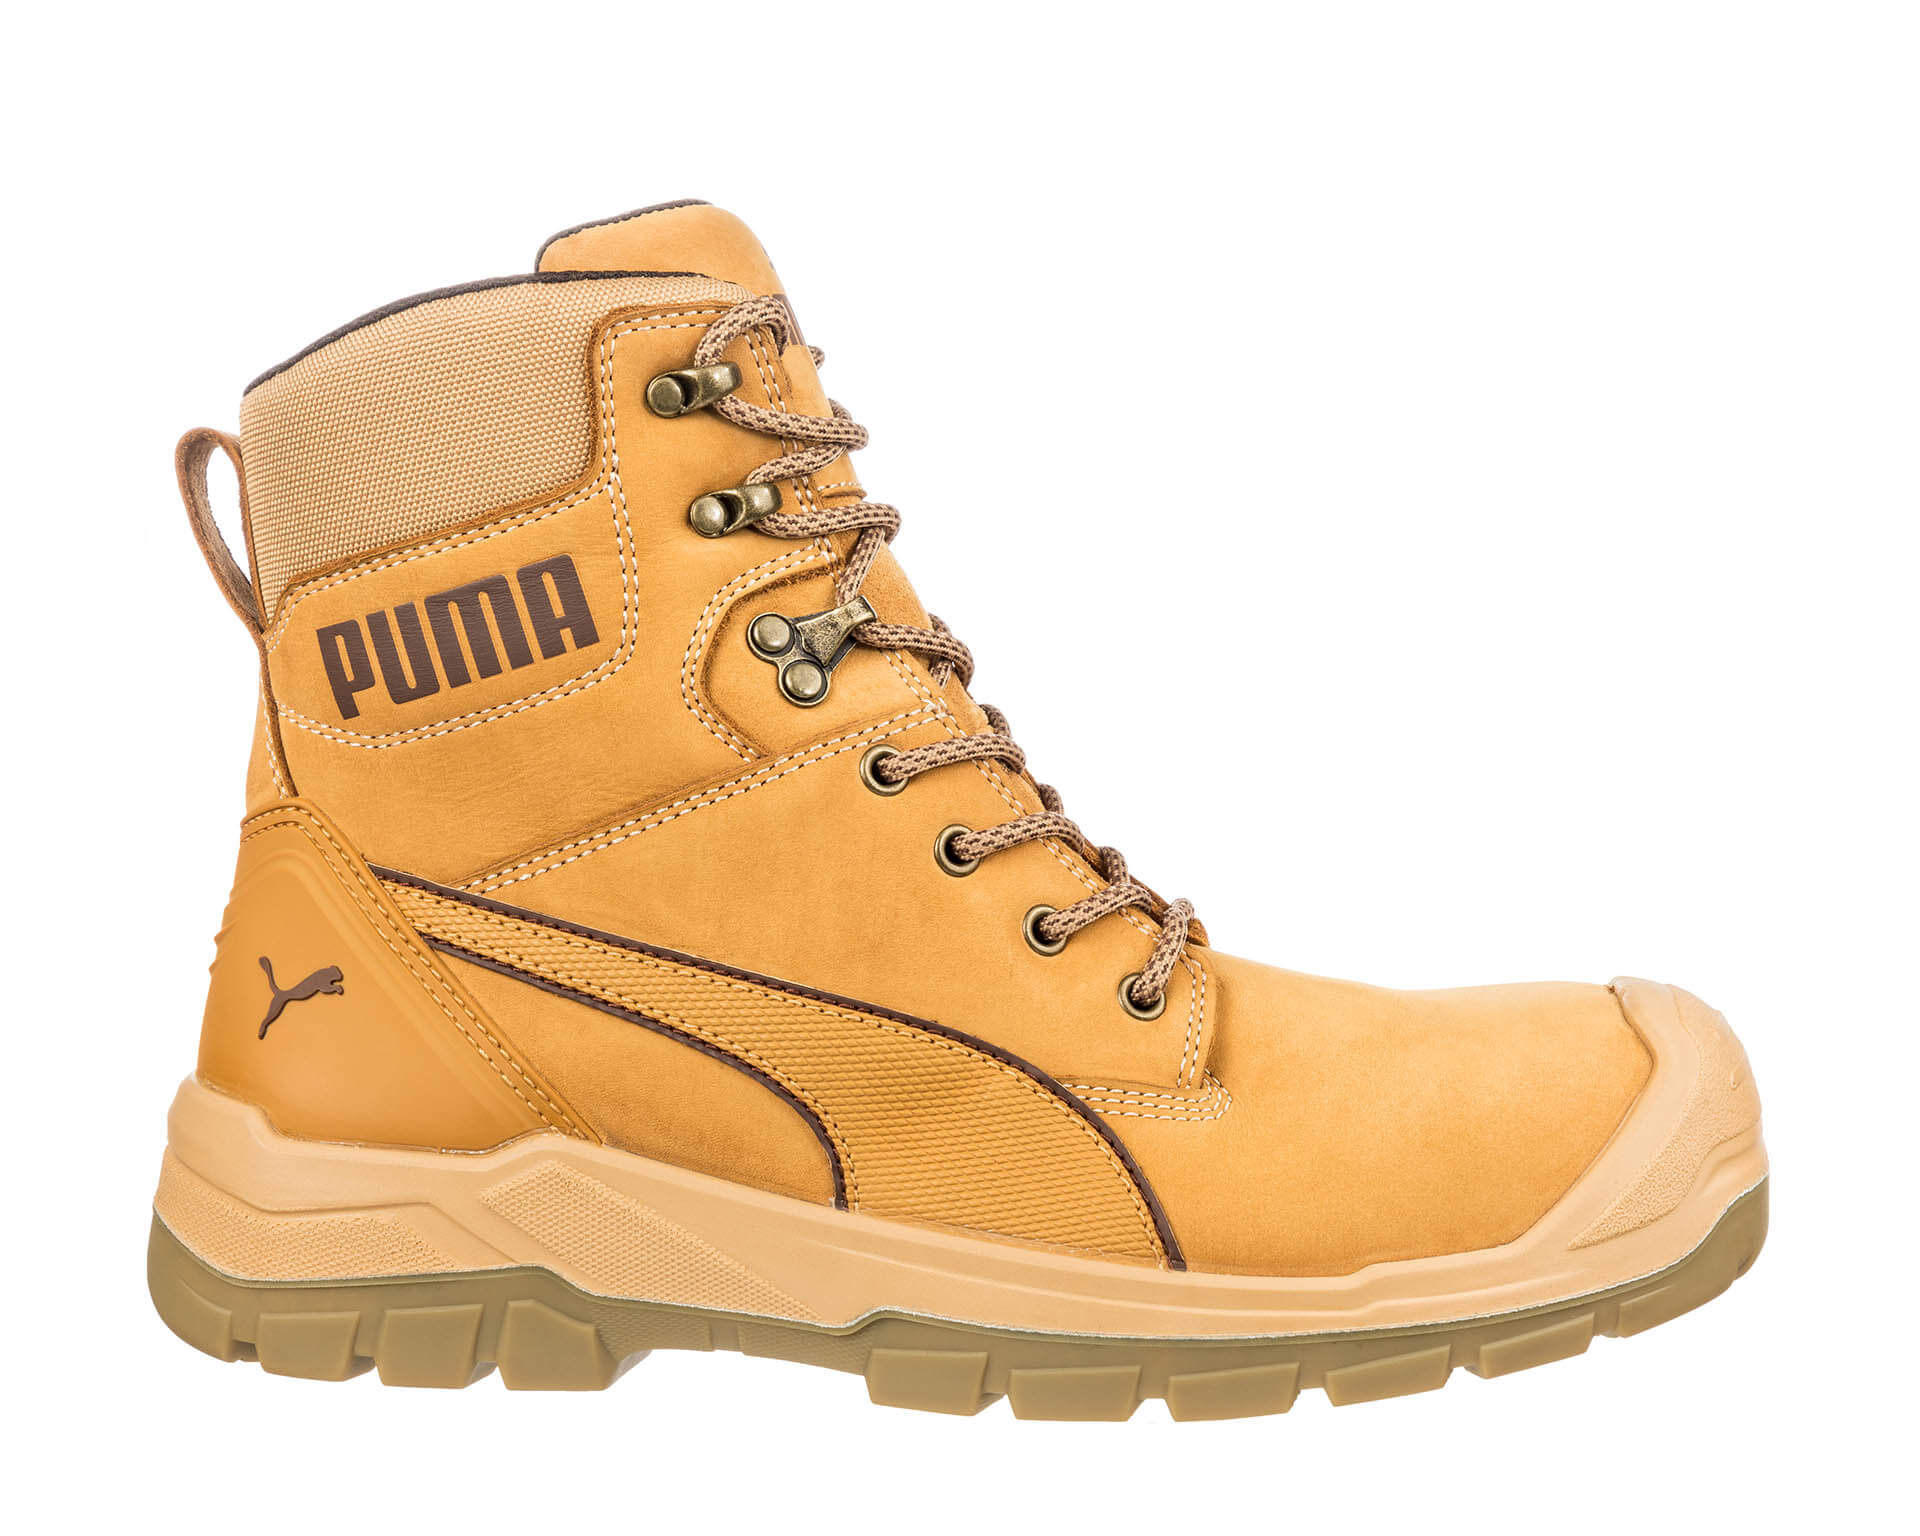 PUMA SAFETY CONQUEST EH HIGH WP Safety Puma CTX ASTM USA | WHEAT